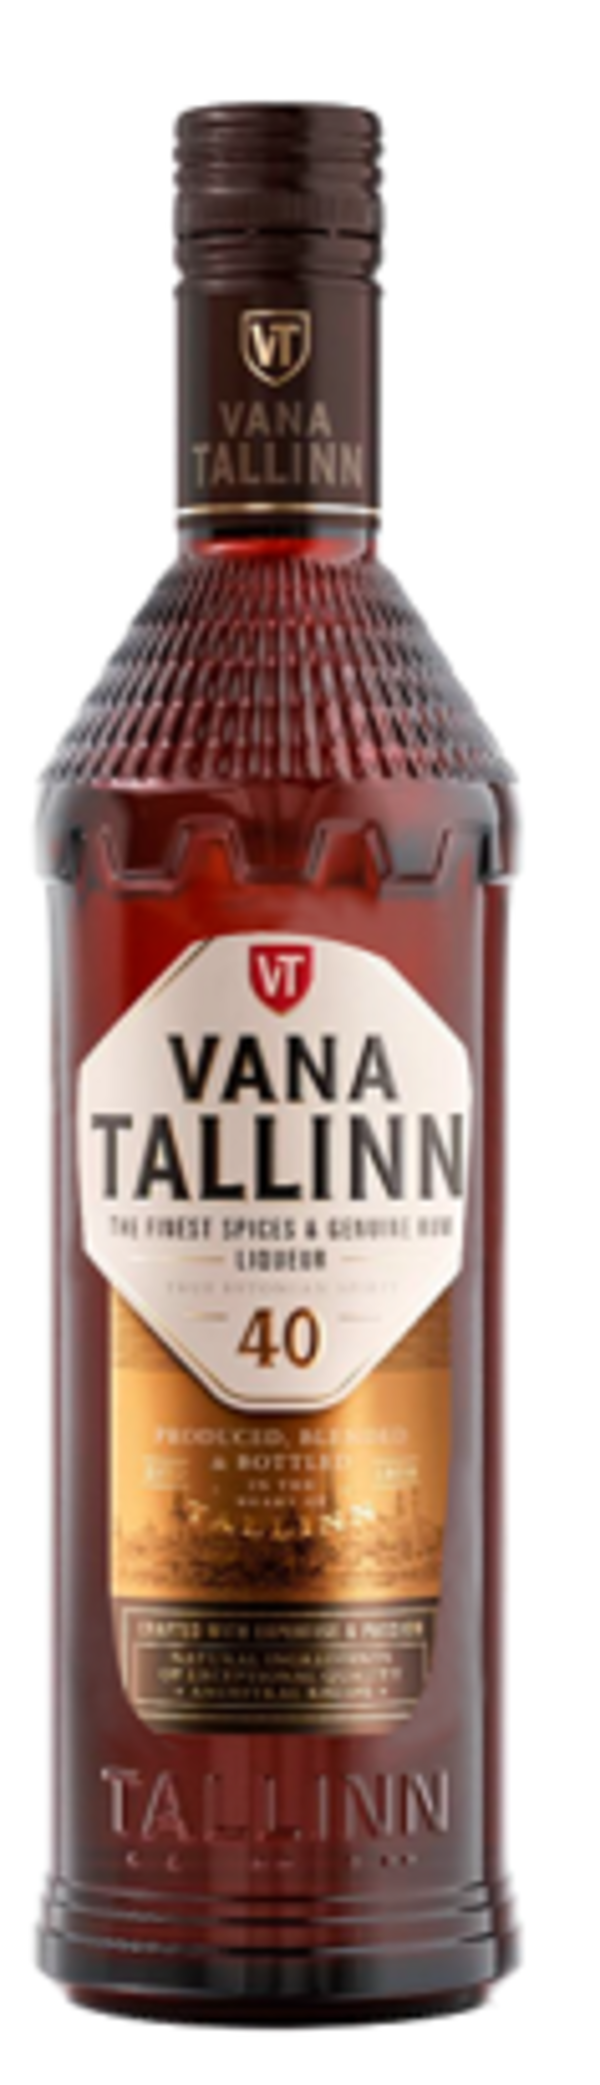 Vana Tallinn Estonian Liqueur